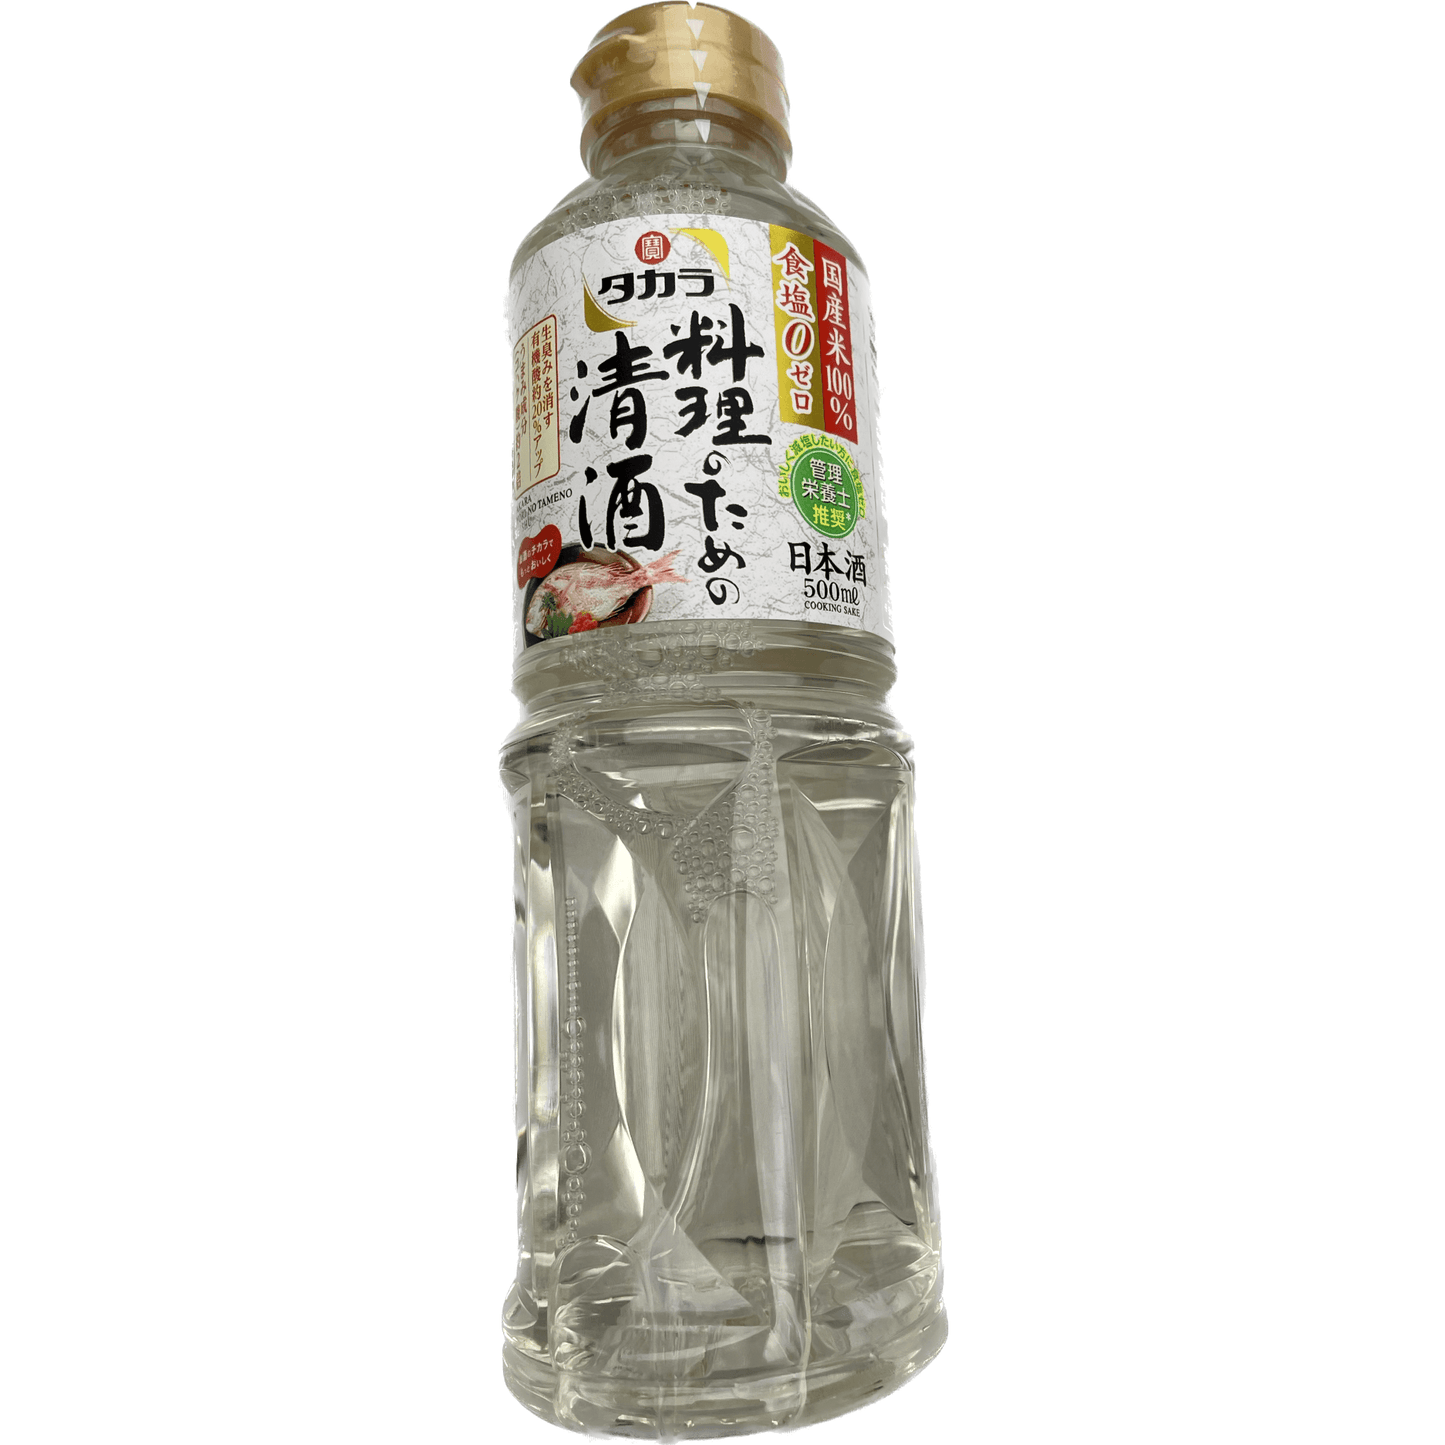 Takara sake for cooking タカラ　料理のための清酒　500ml - RiceWineShop